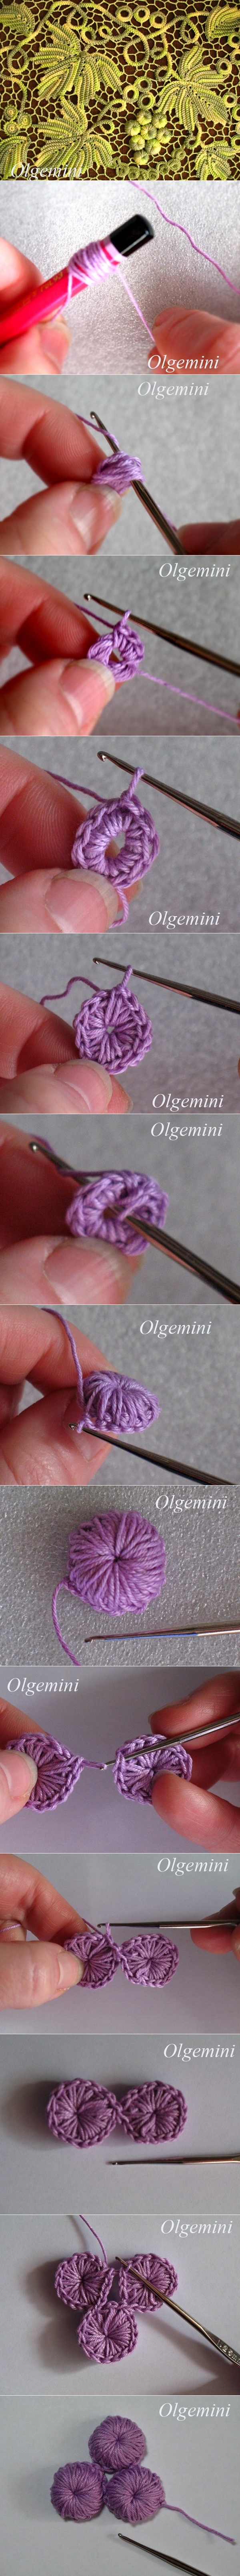 crochet grape pattern tutorials